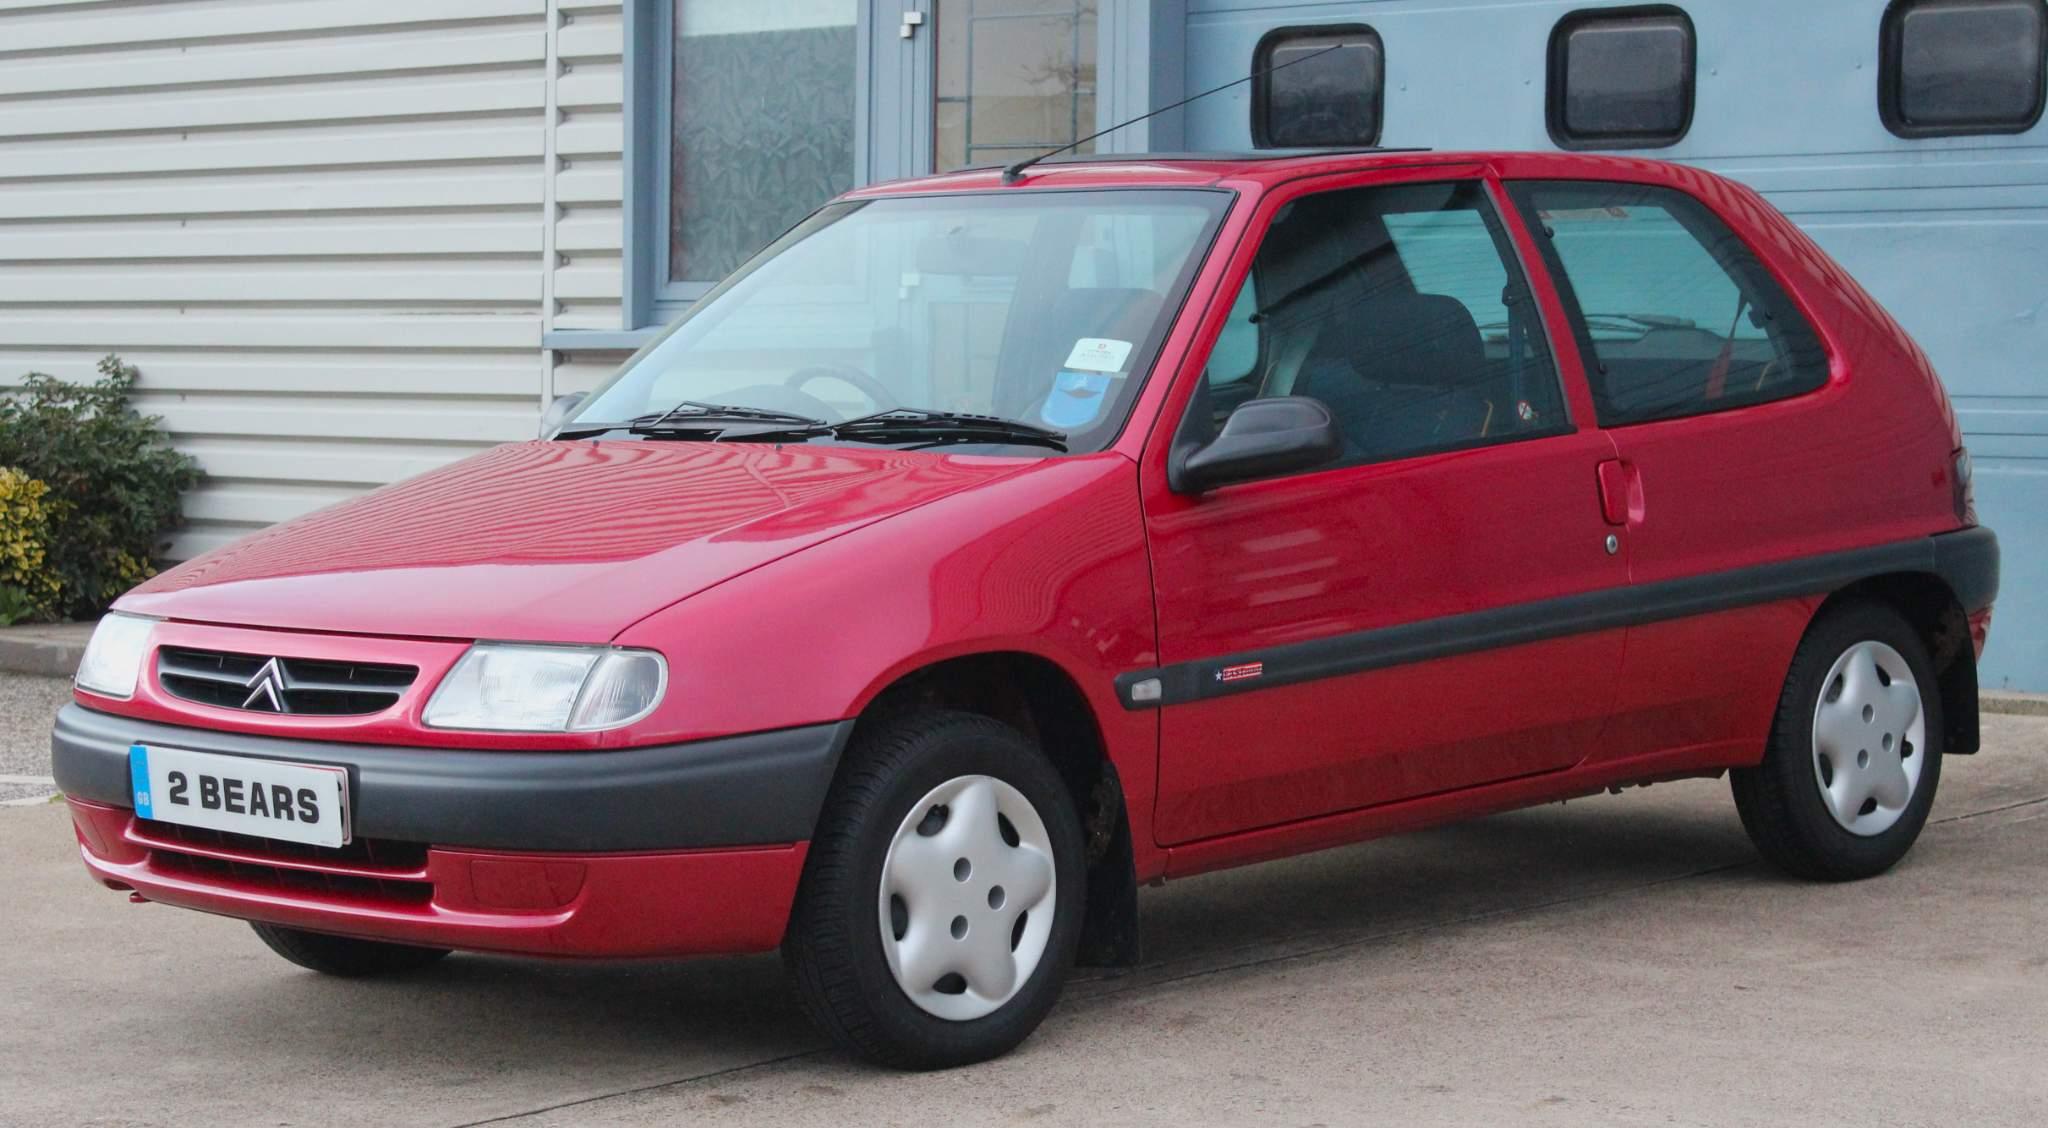 Used Citroën Saxo Hatchback (1996 - 2003) Review